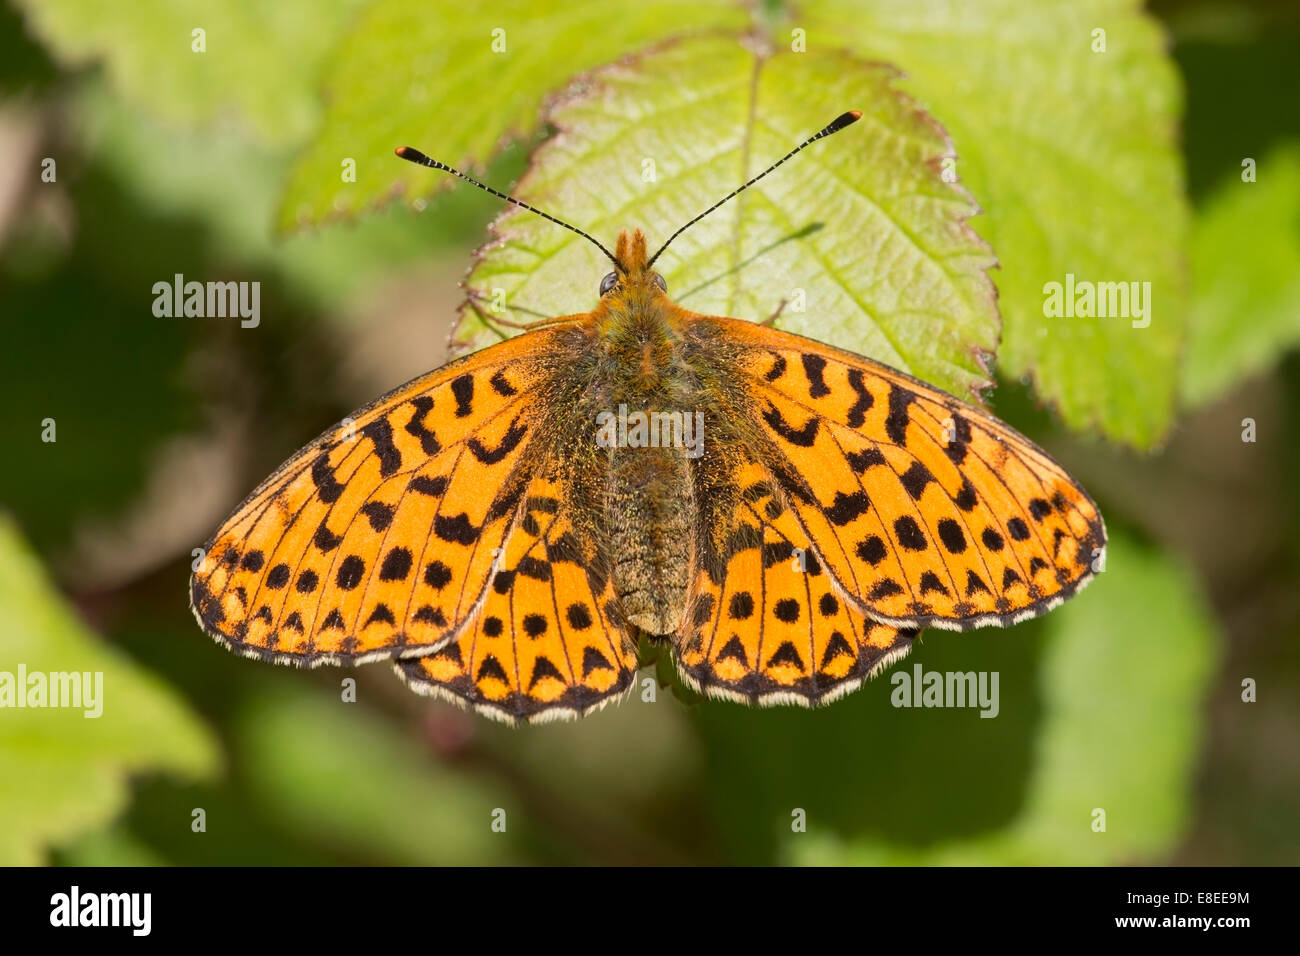 Recién surgido adulto bordeados con perla speyeria descansando sobre mariposas hoja de zarzas, New Forest, Inglaterra Foto de stock